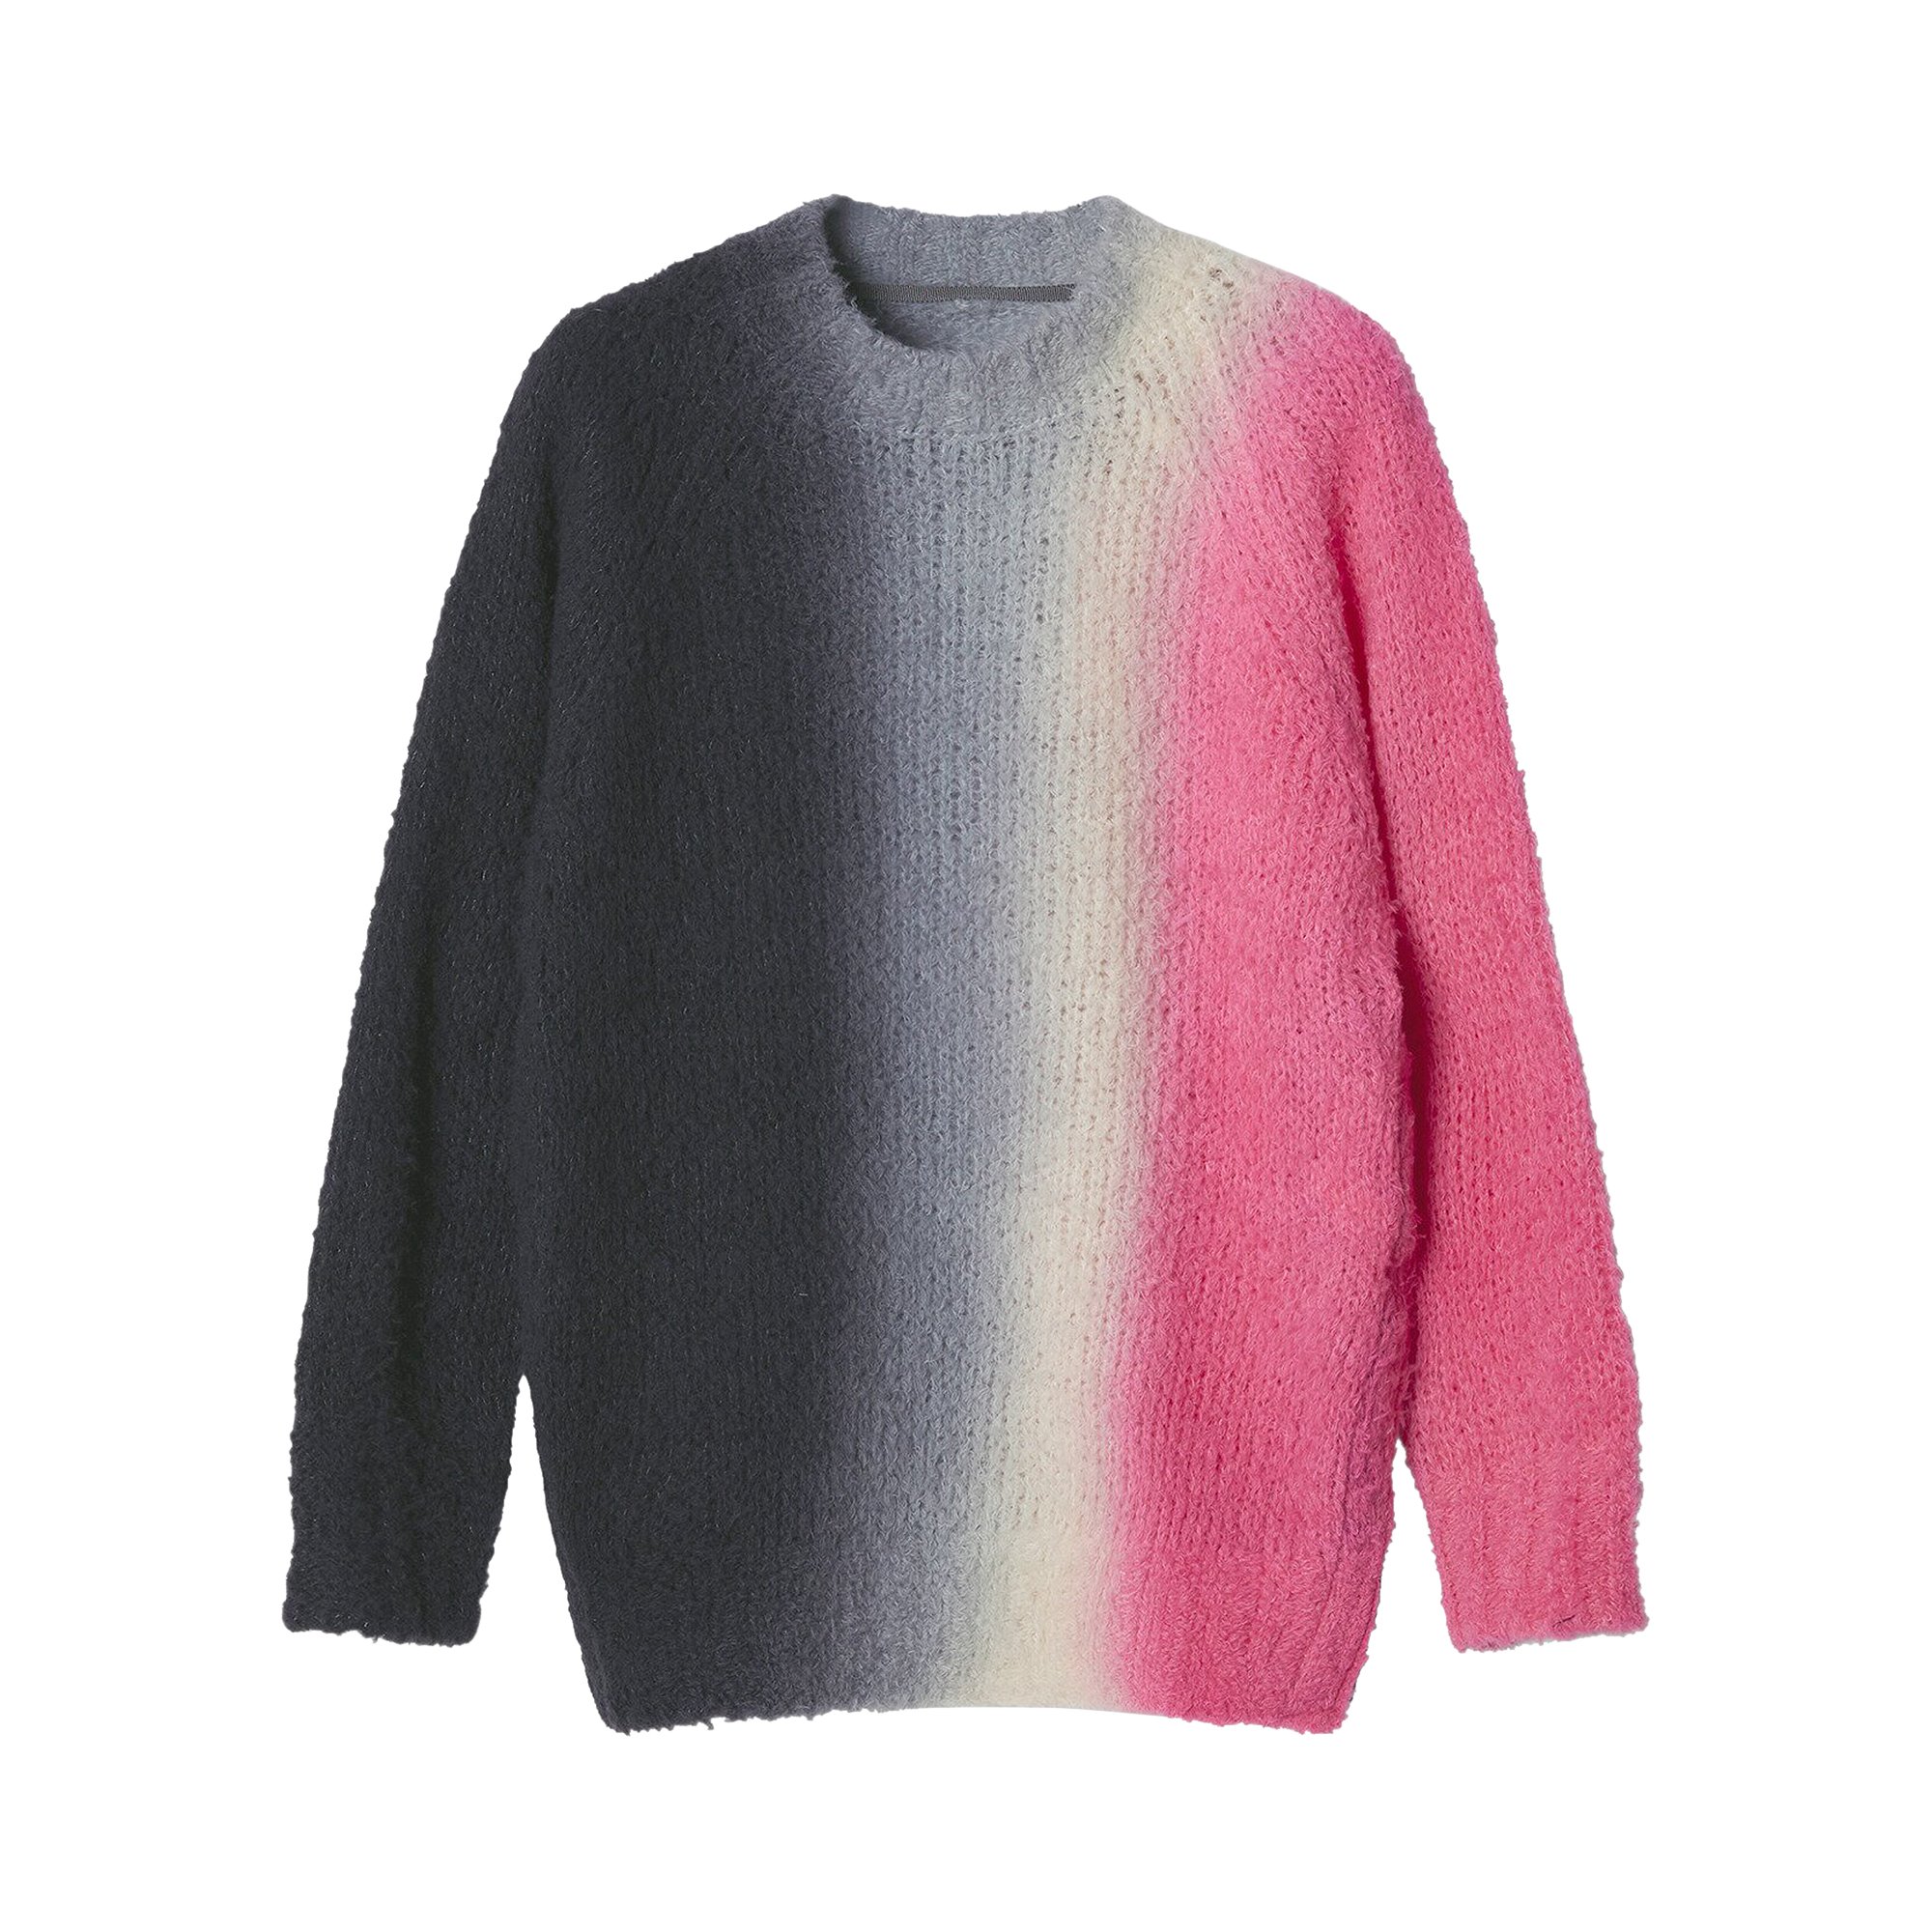 Buy Sacai Tie Dye Knit Pullover 'Black/Grey/Pink' - 23 06894 329 